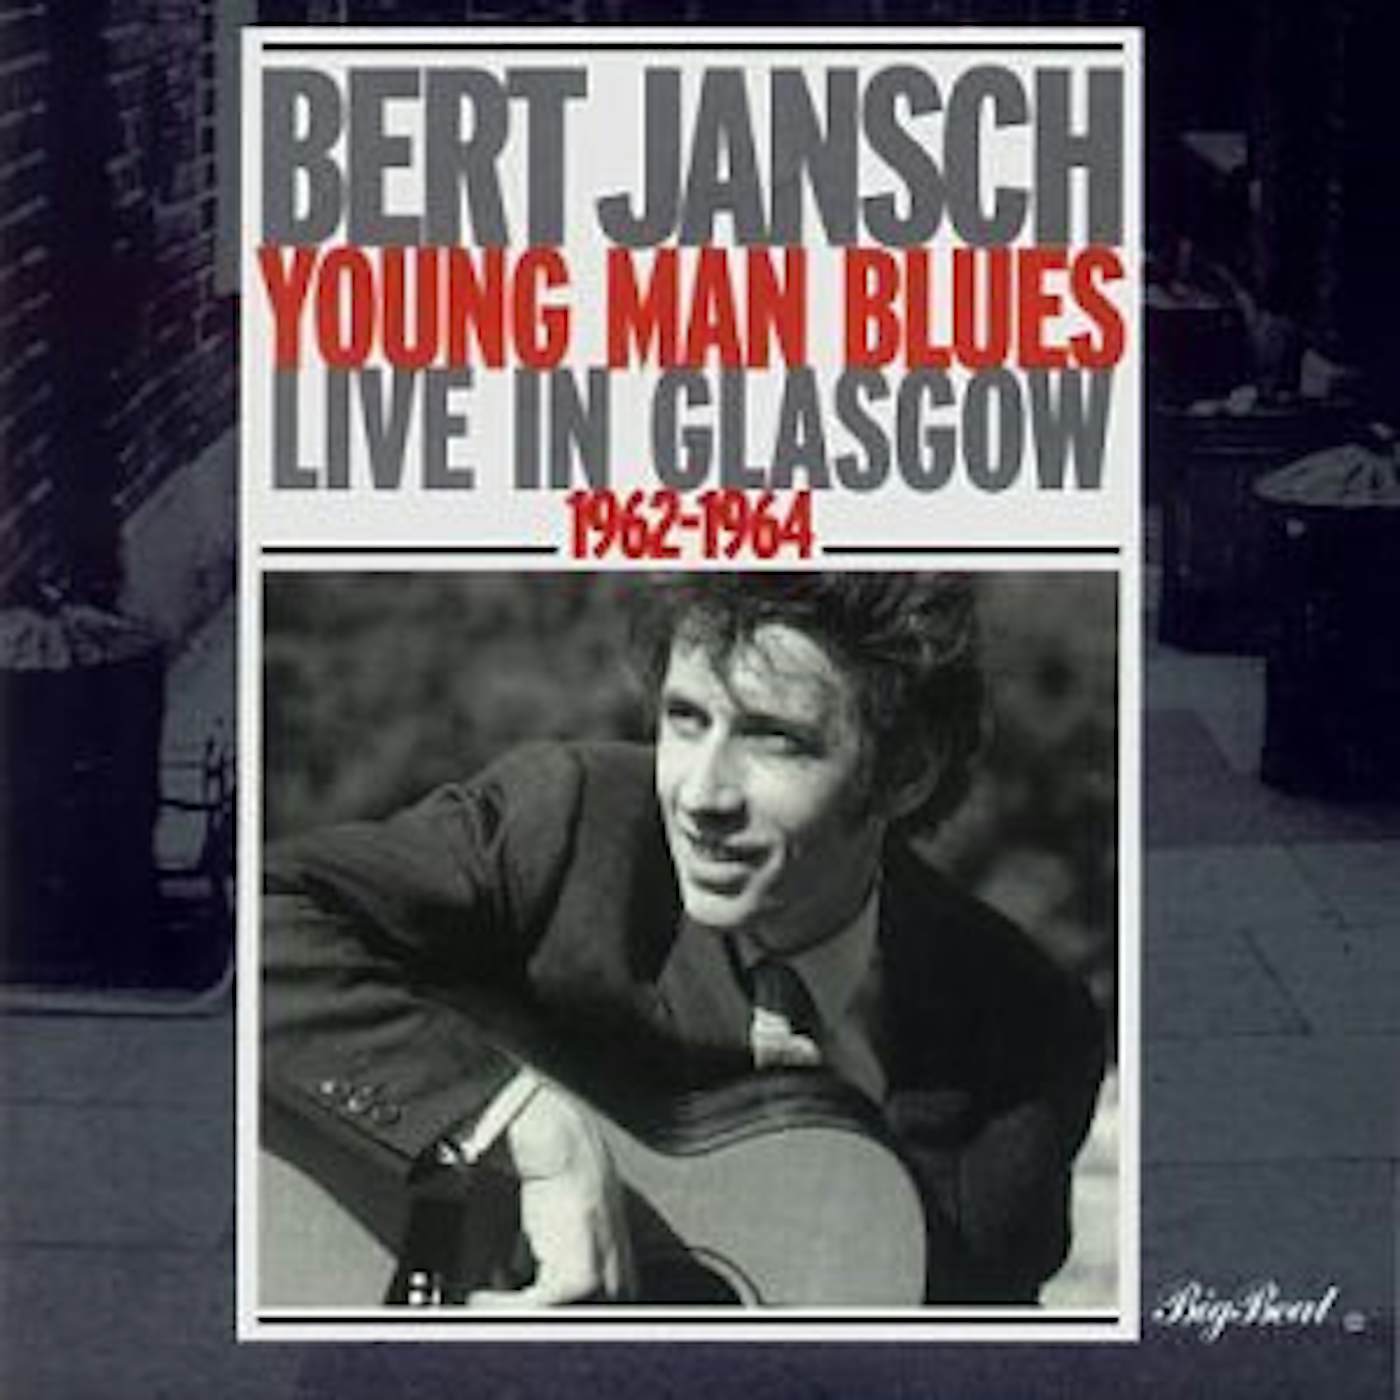 Bert Jansch YOUNG MAN BLUES: LIVE IN GLASGOW 1962-64 CD